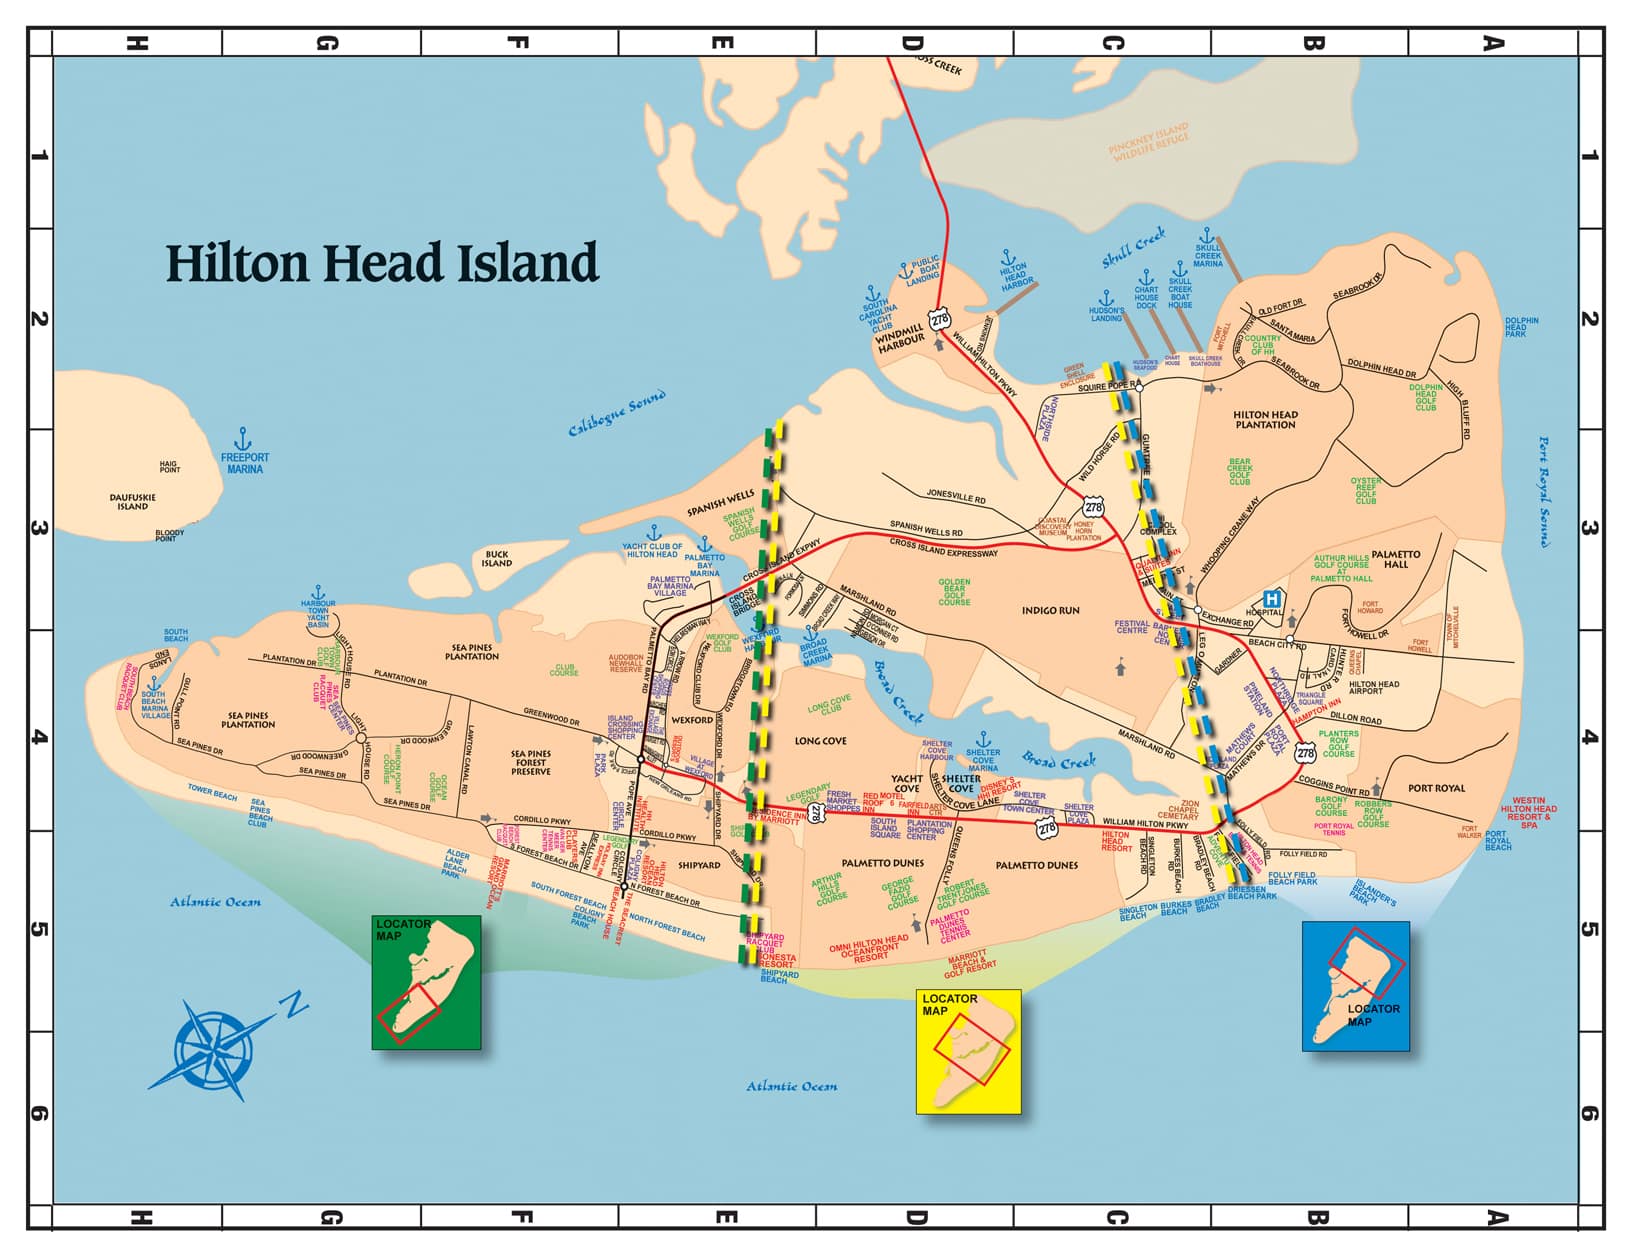 Hilton Head Island, SC - wide 3